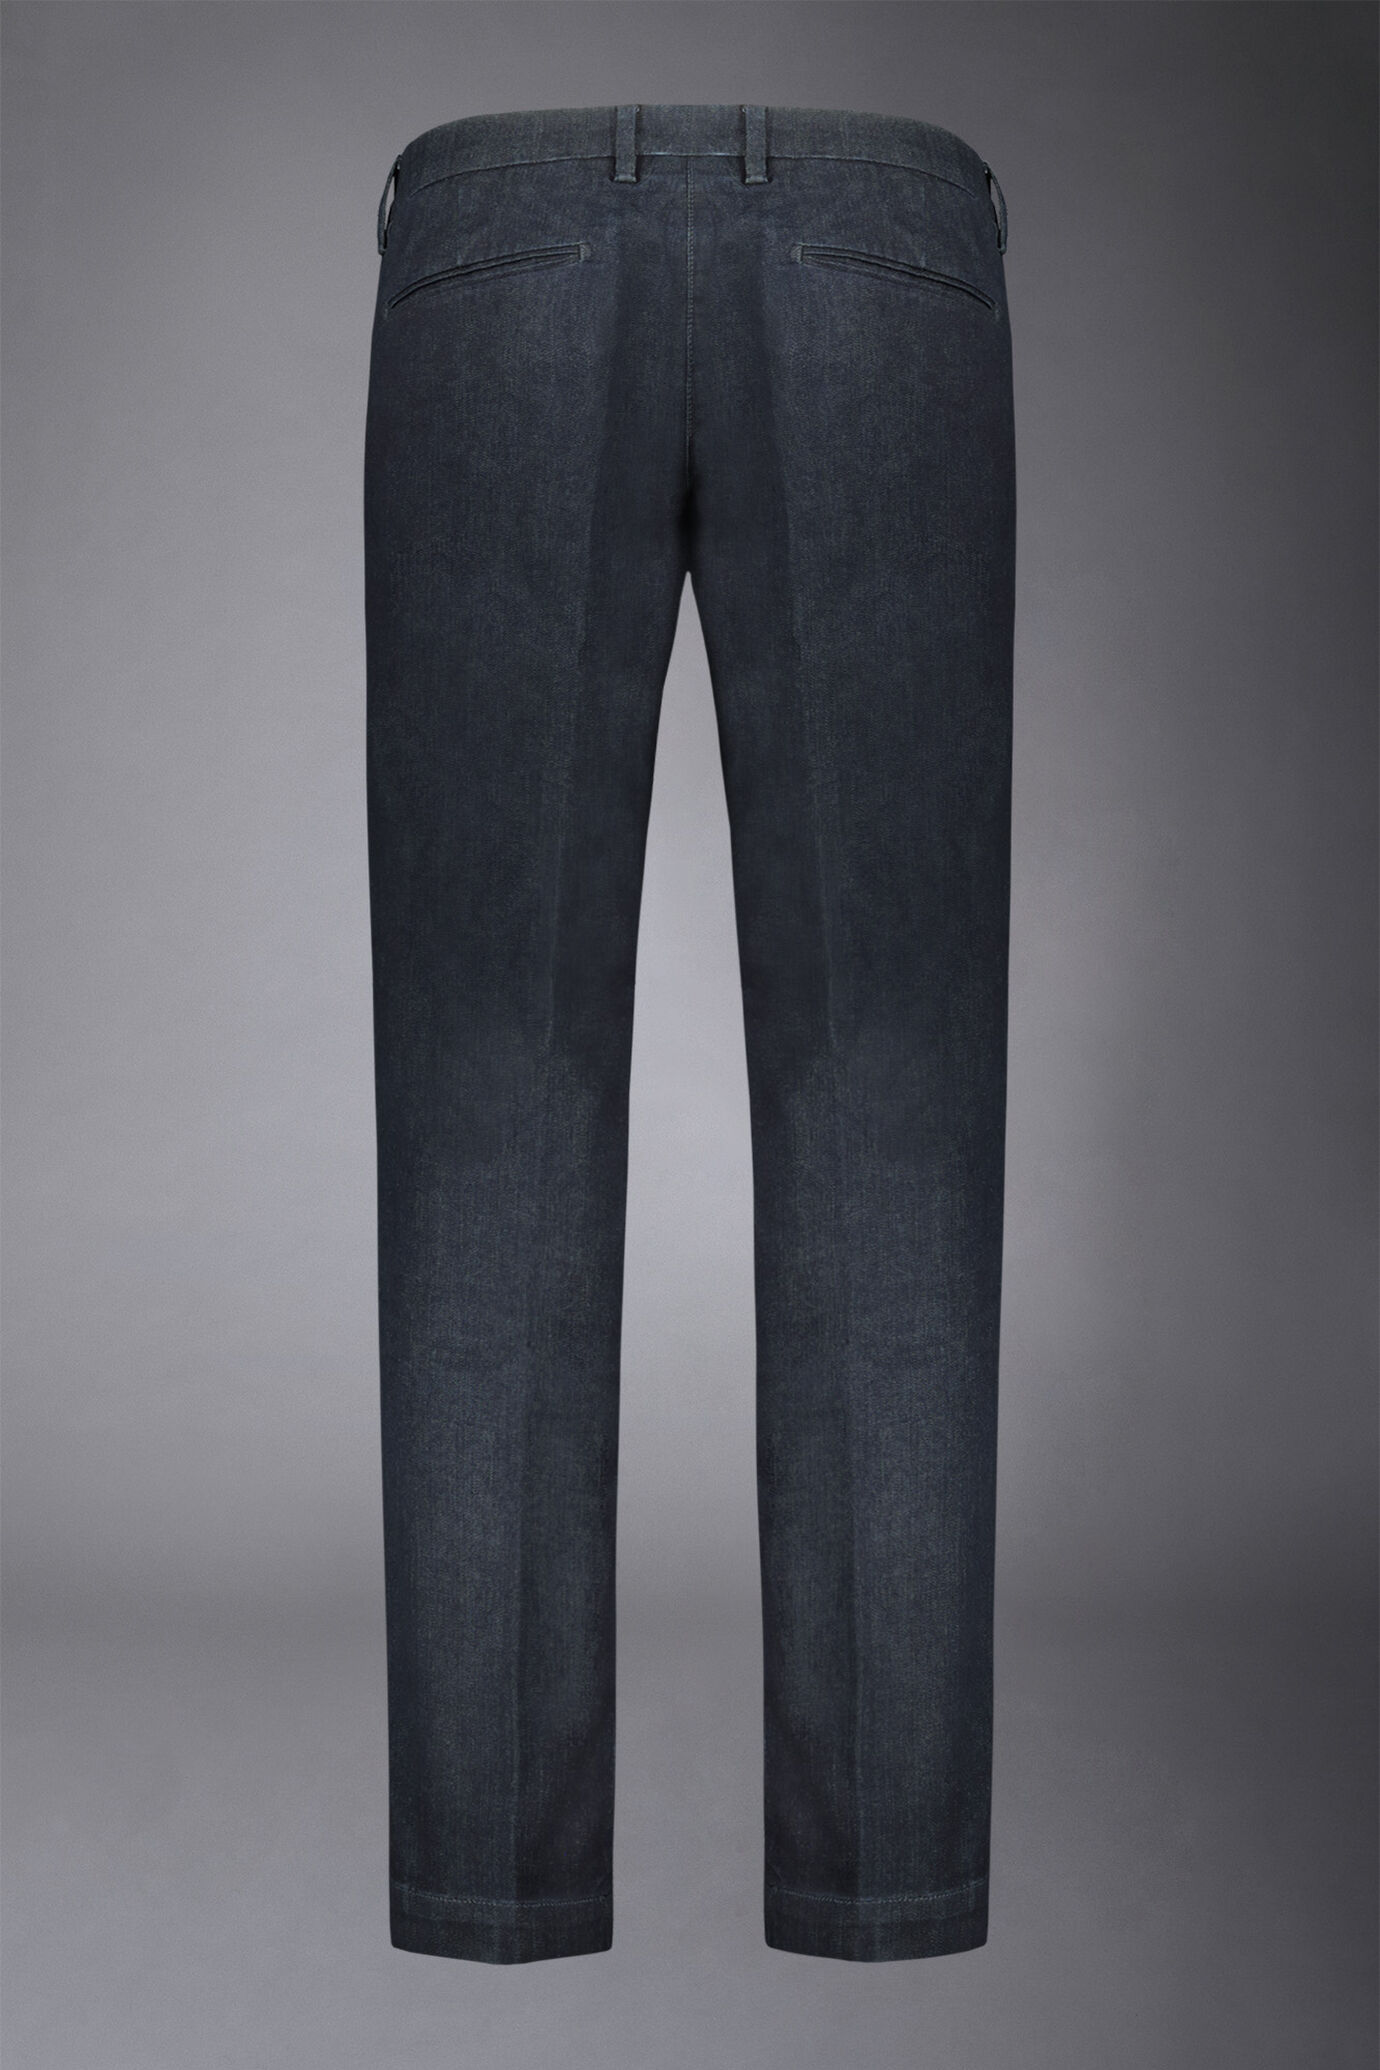 Pantalone chino uomo tessuto denim leggermente elasticizzato regular fit image number 5